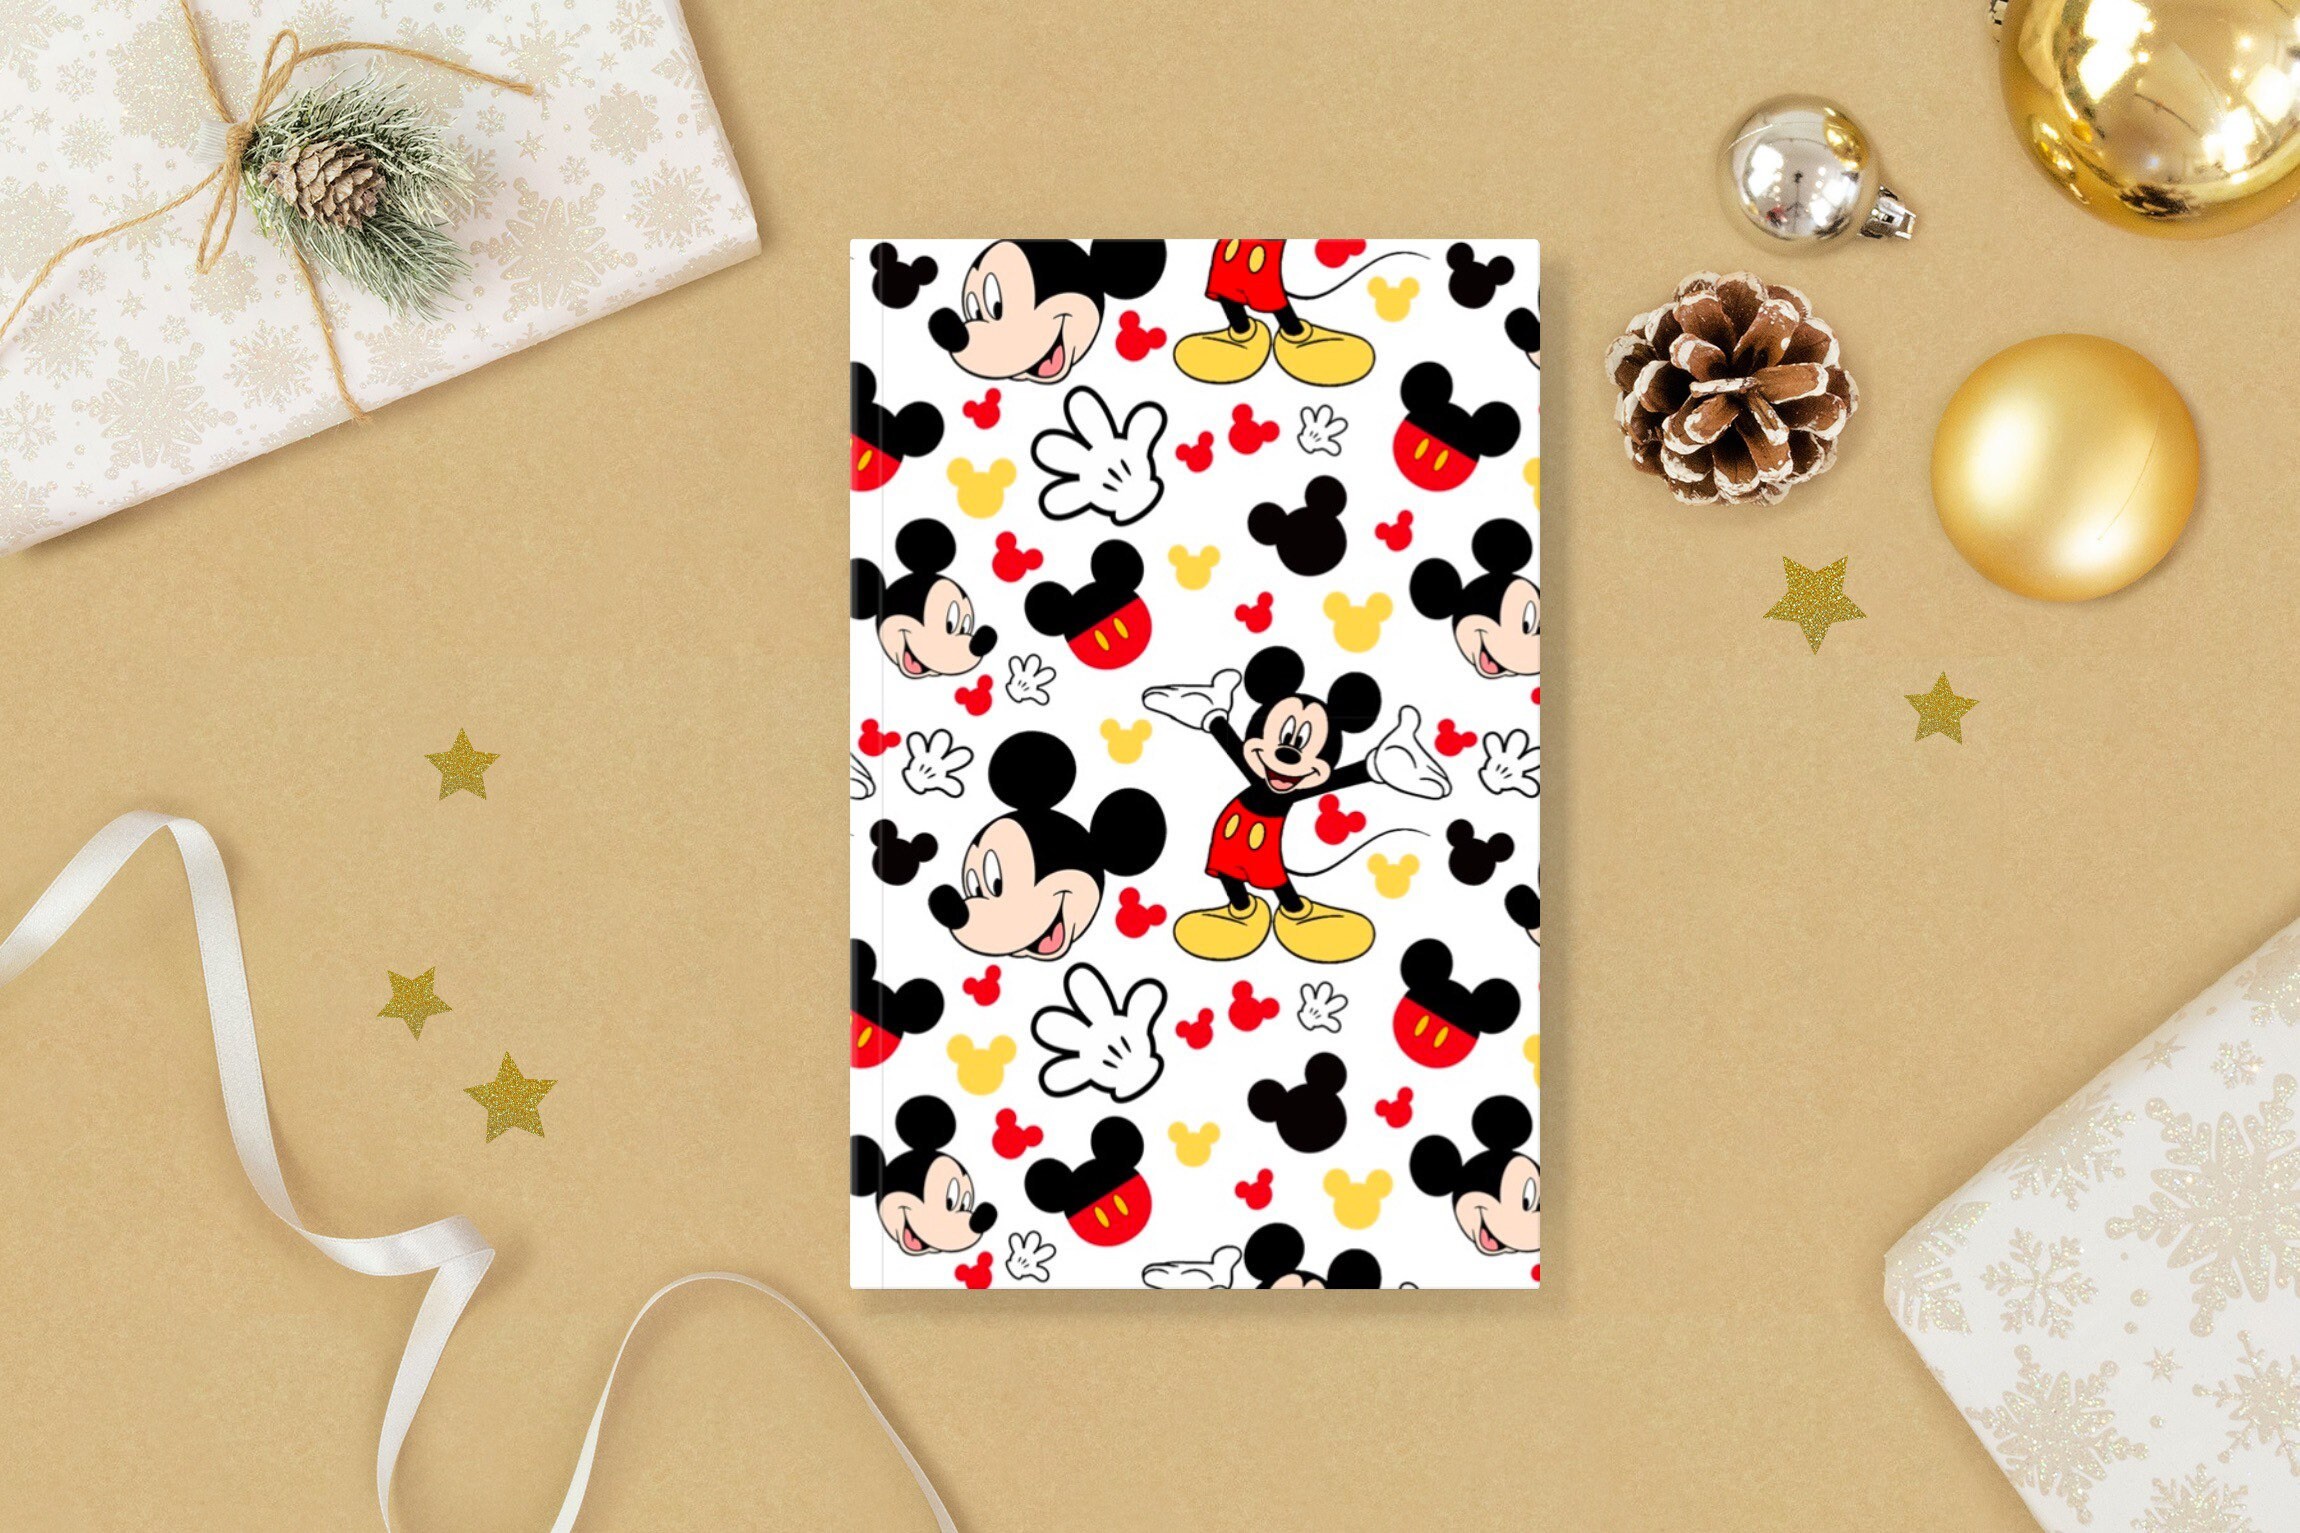 Mickey Mouse Wrapping Paper Sheets Disney Disneyland Magic Kingdom